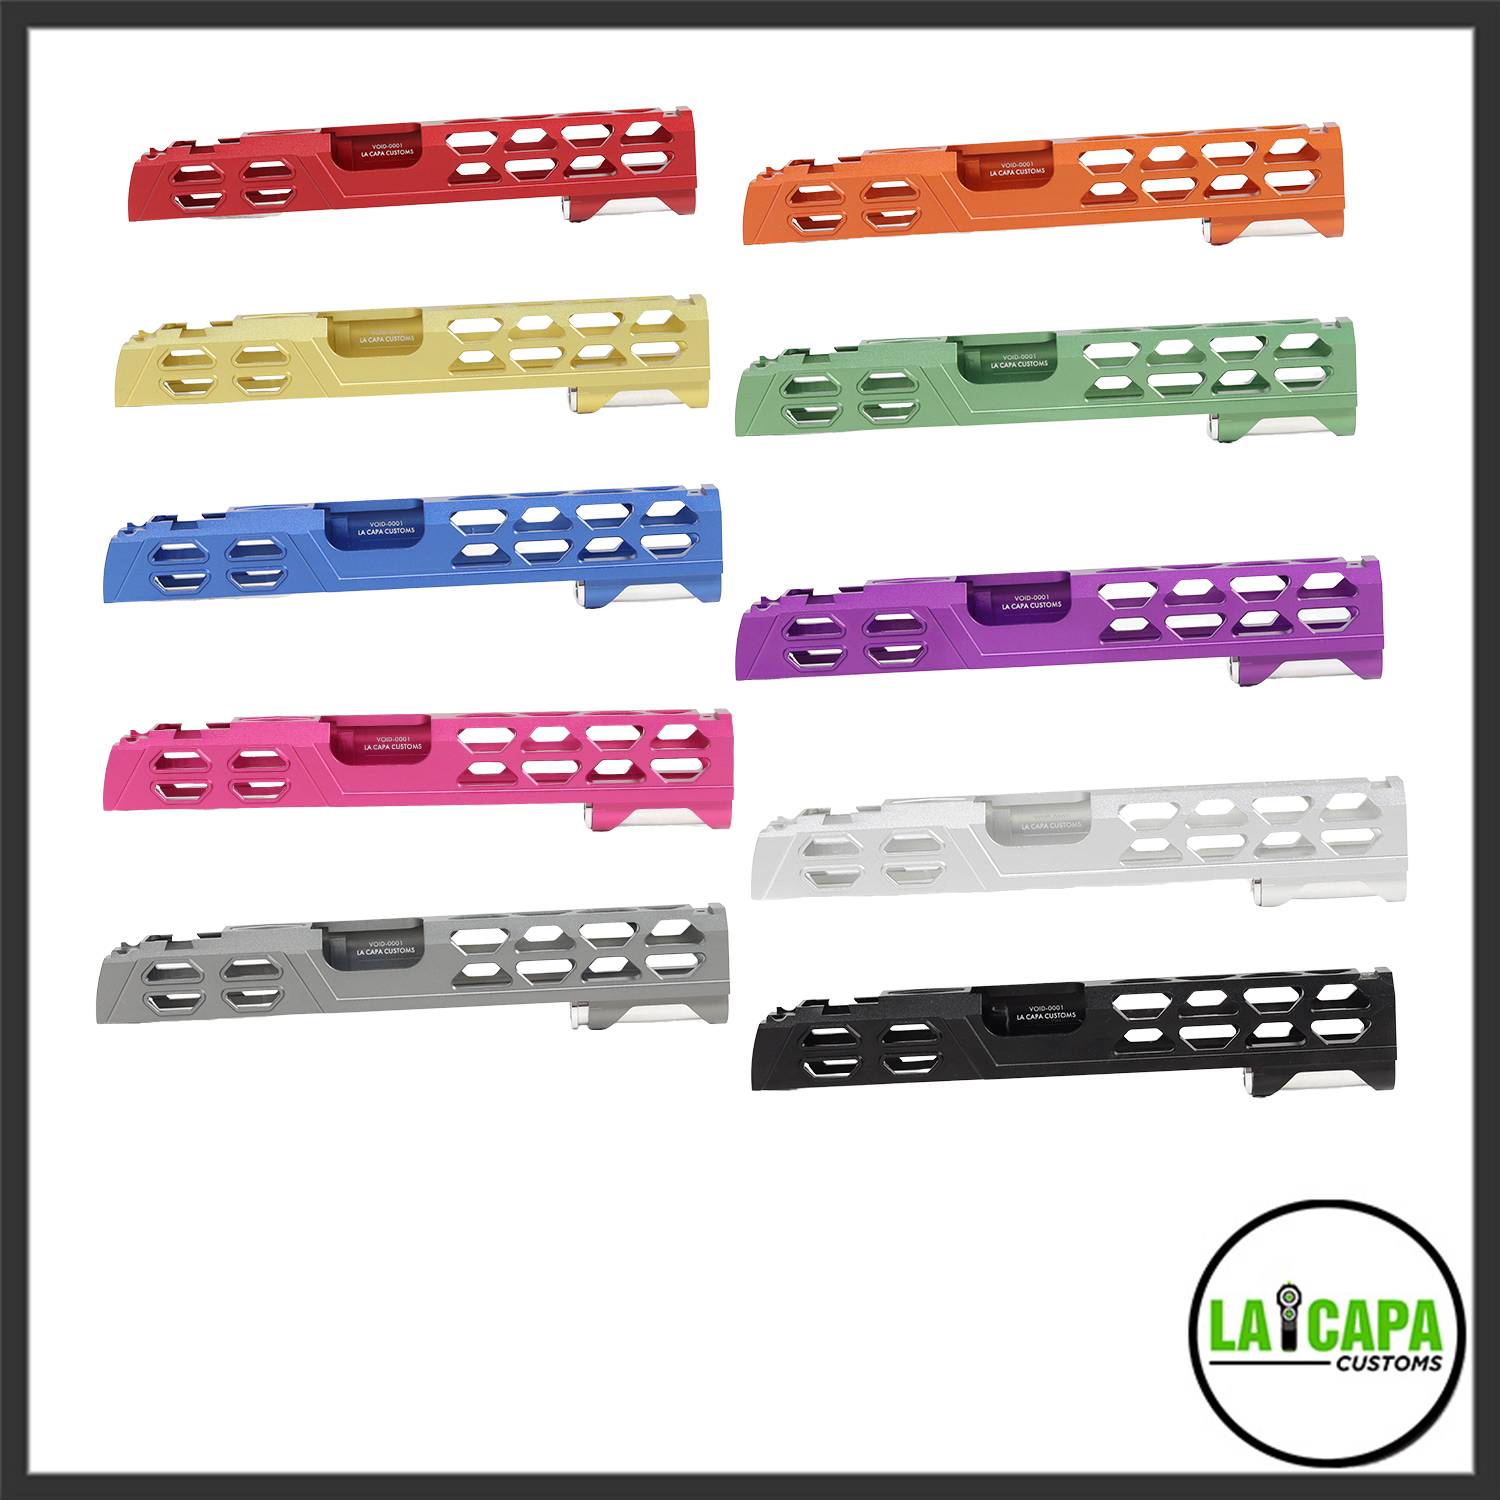 LA Capa Customs 5.1 “VOID” Aluminum Slide

- Pink